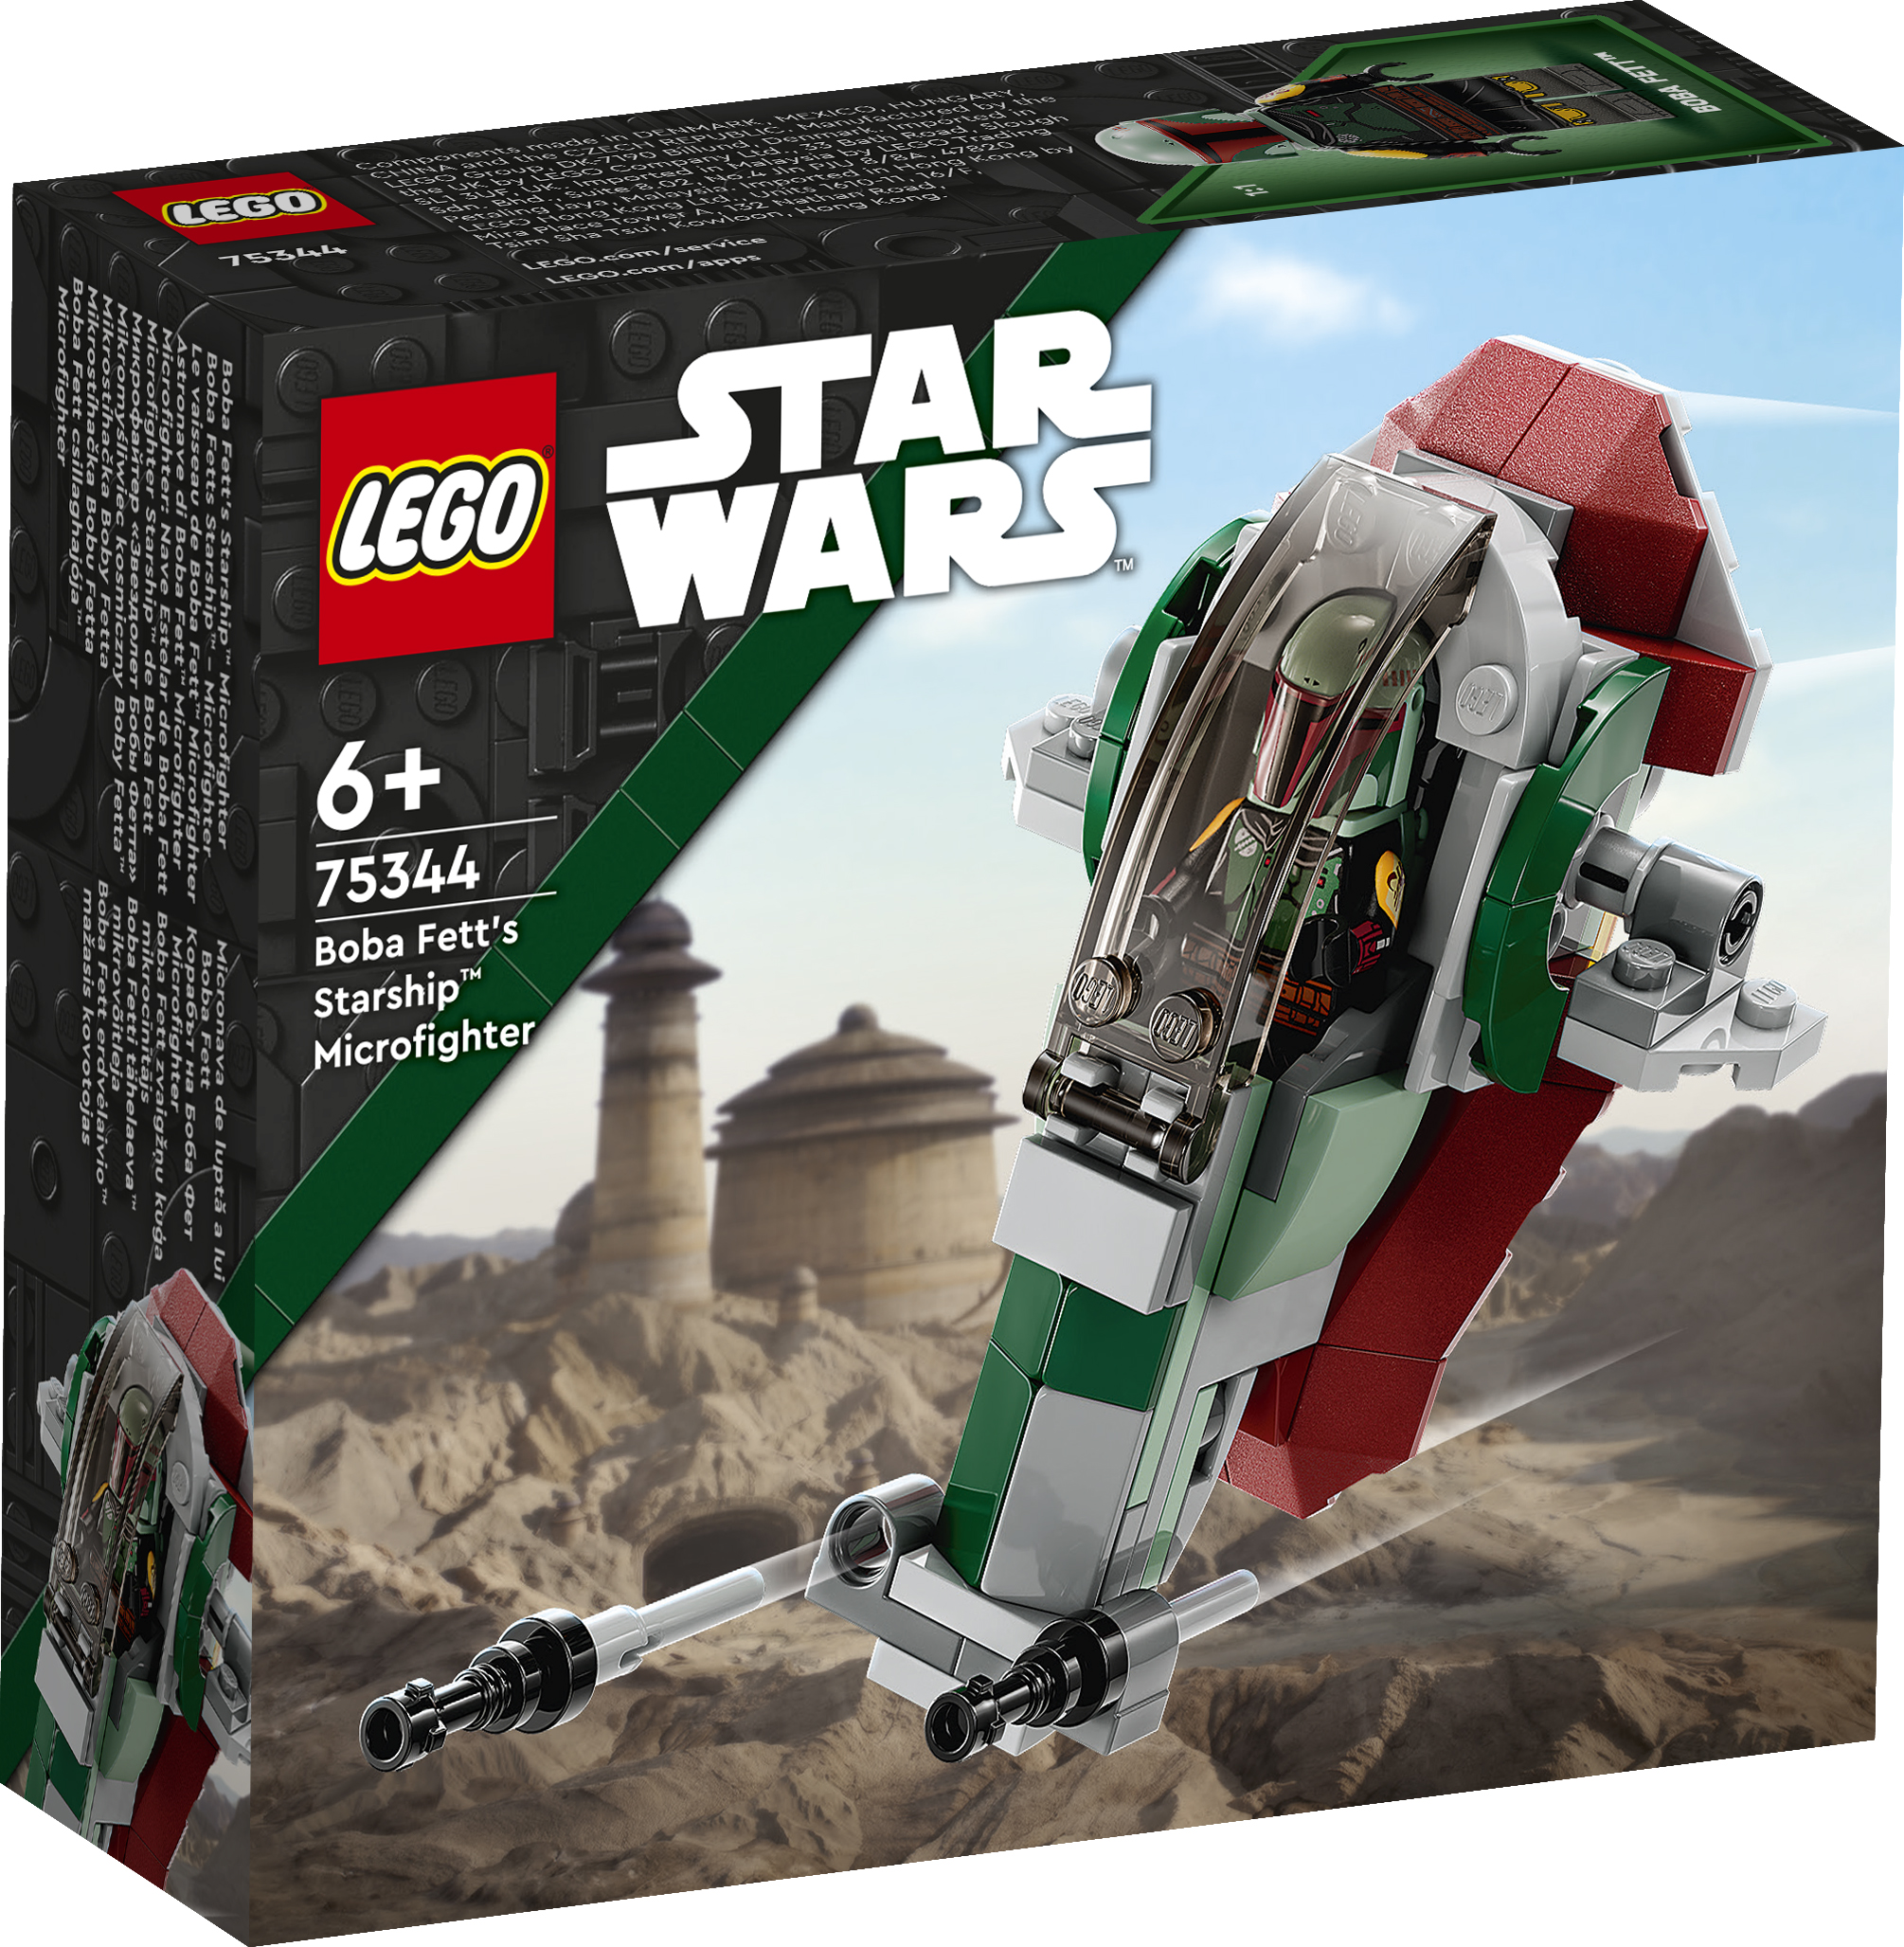 LEGO Star Wars: Skywalker Saga Reveals Surprising Clone Wars Content